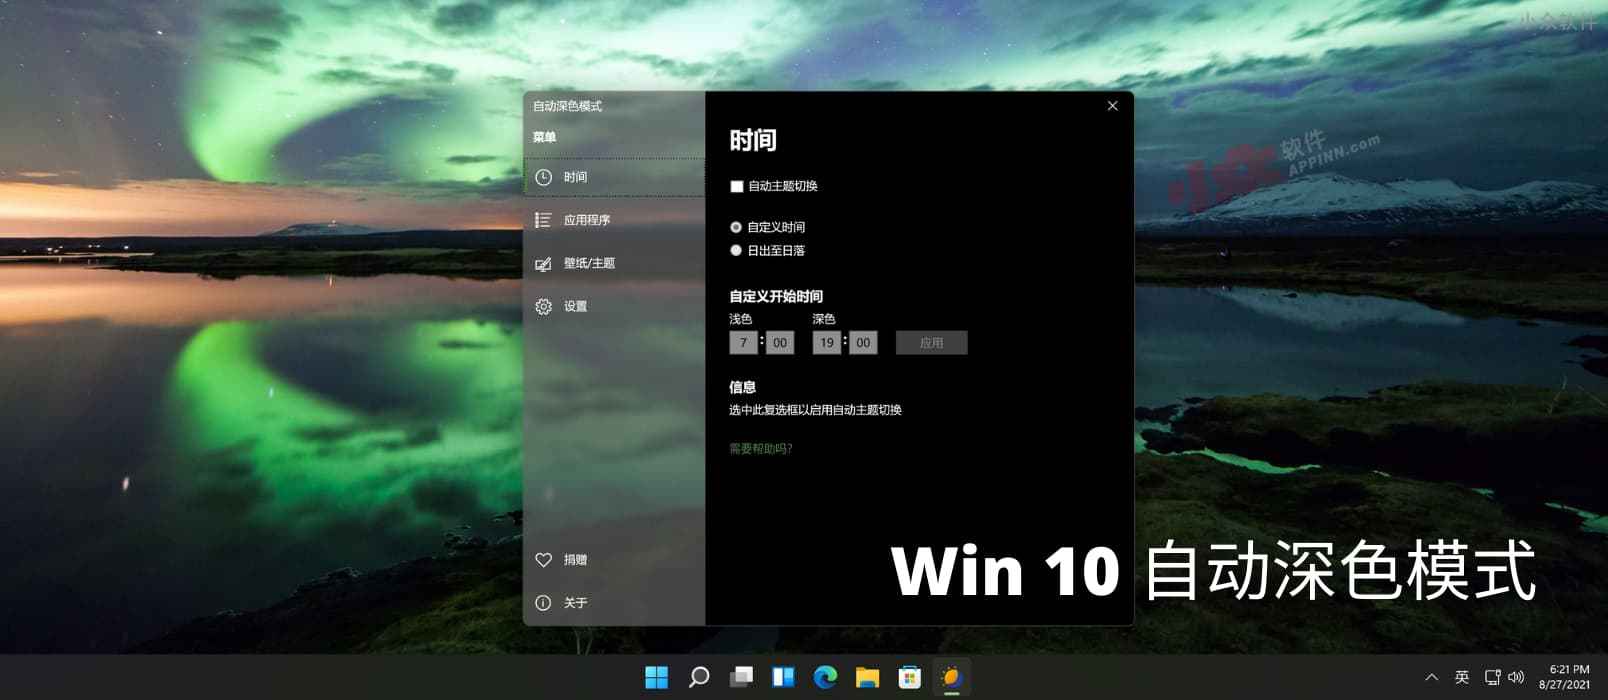 Windows 10 Auto Dark Mode - Win 10  自动深色模式